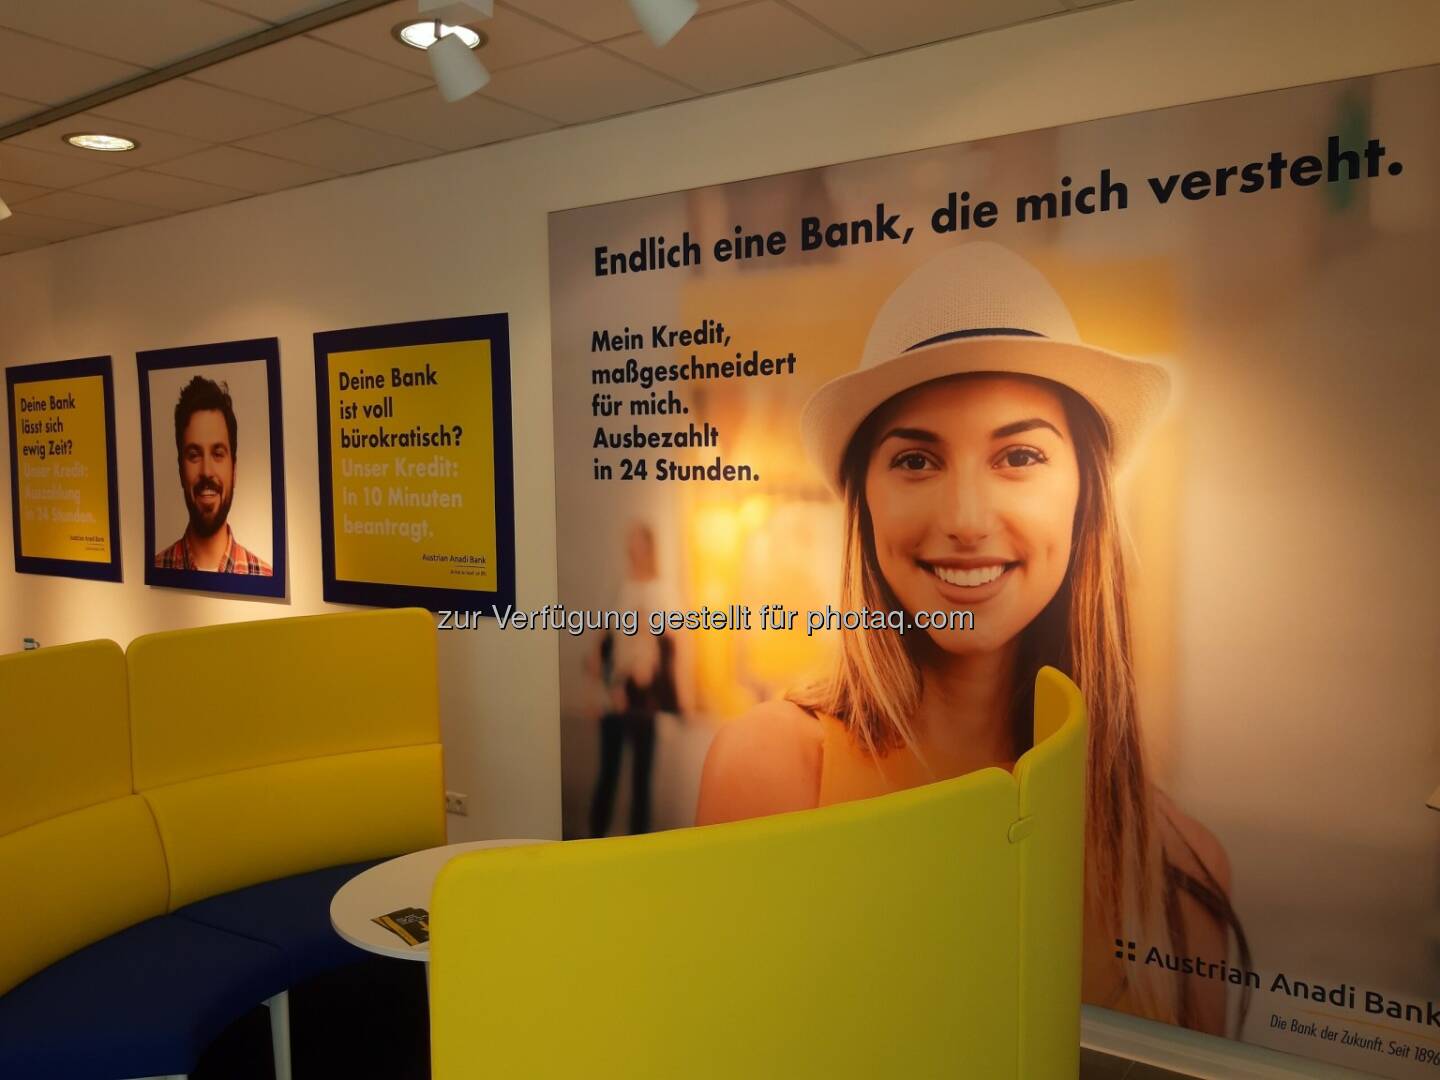 AUSTRIAN ANADI BANK KREDIT SHOP (Bild: Austrian Anadi Bank)